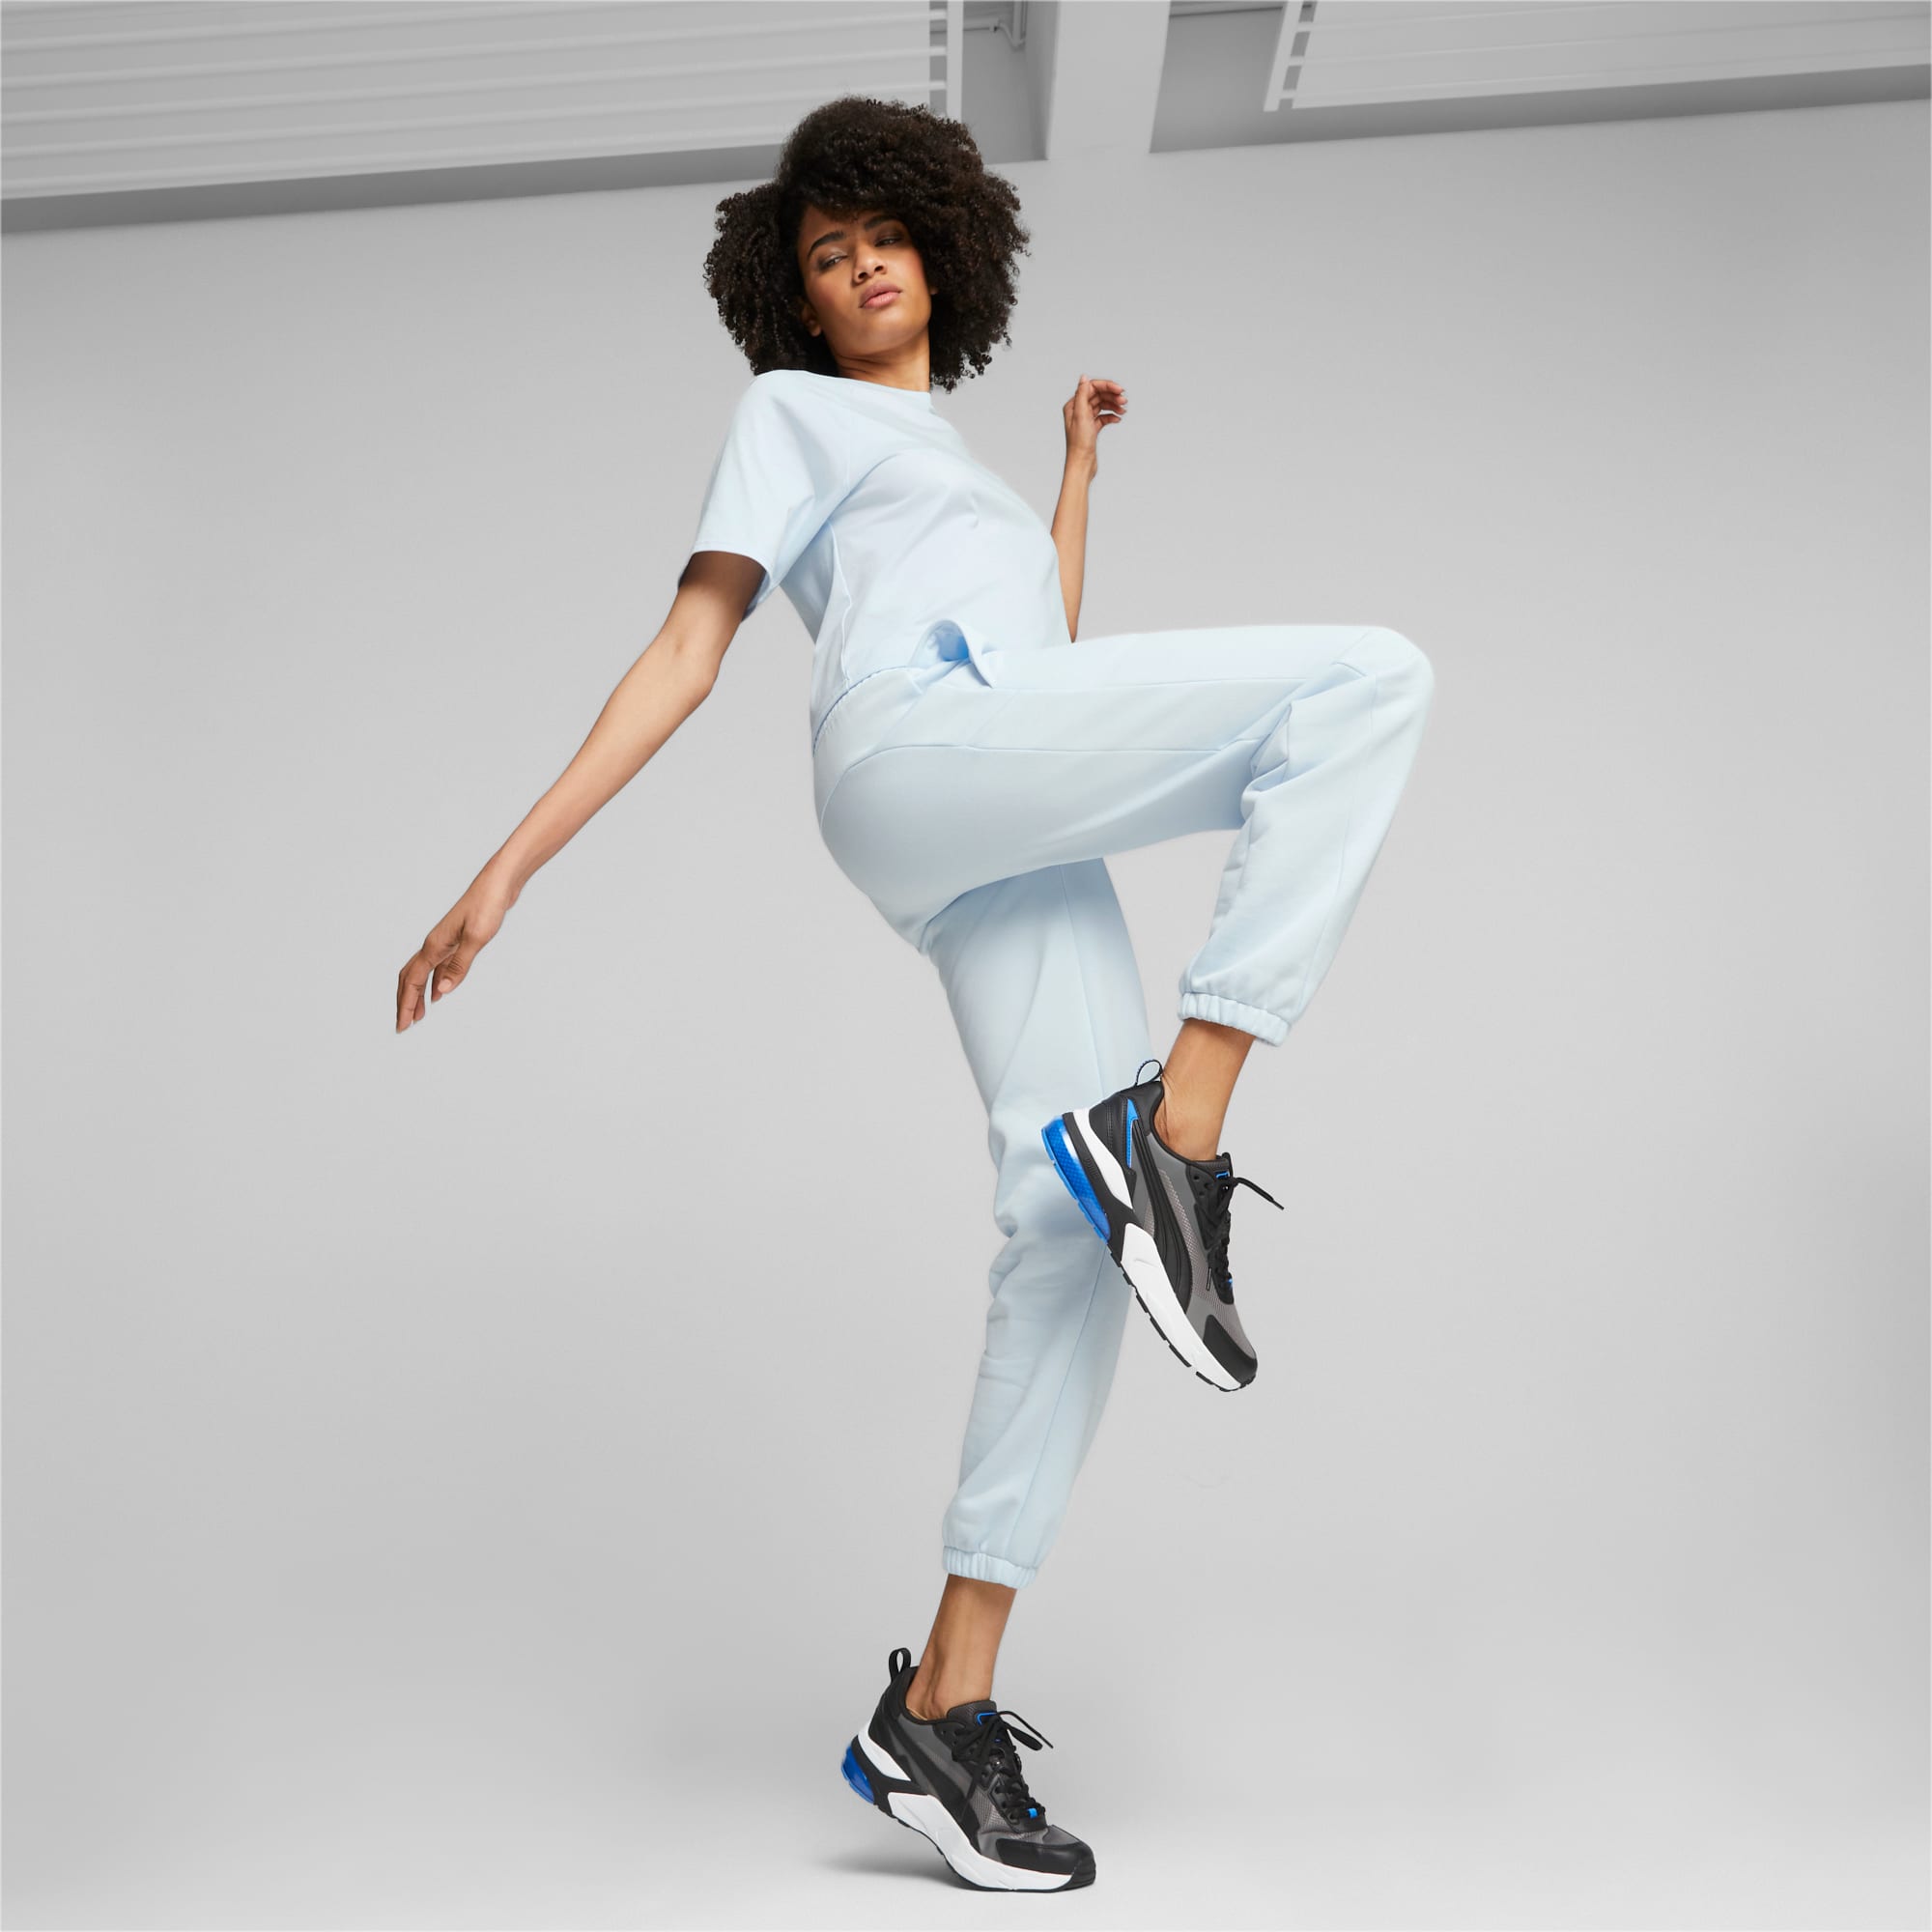 Women's PUMA Vis2K Sneakers, Cast Iron/Black/Ultra Blue, Size 35,5, Shoes